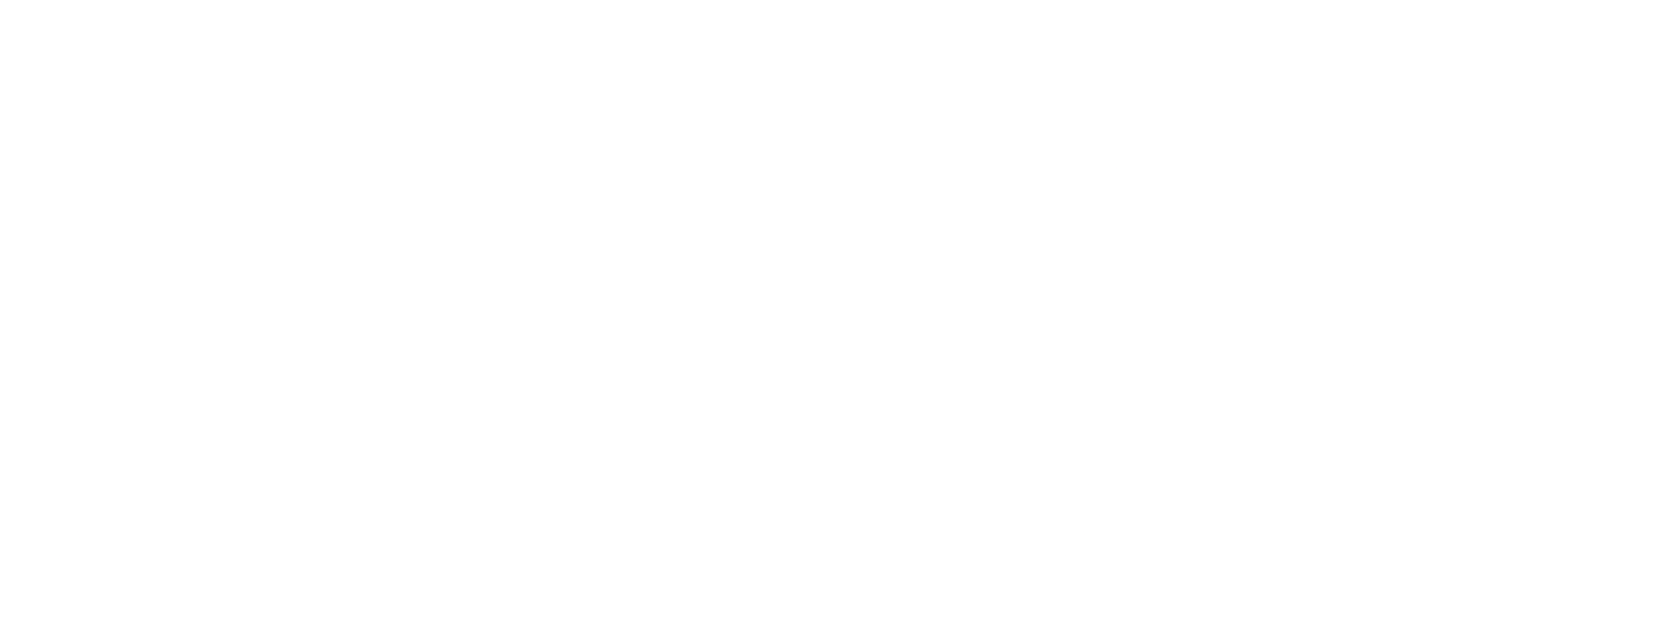 Focus Advokater logo